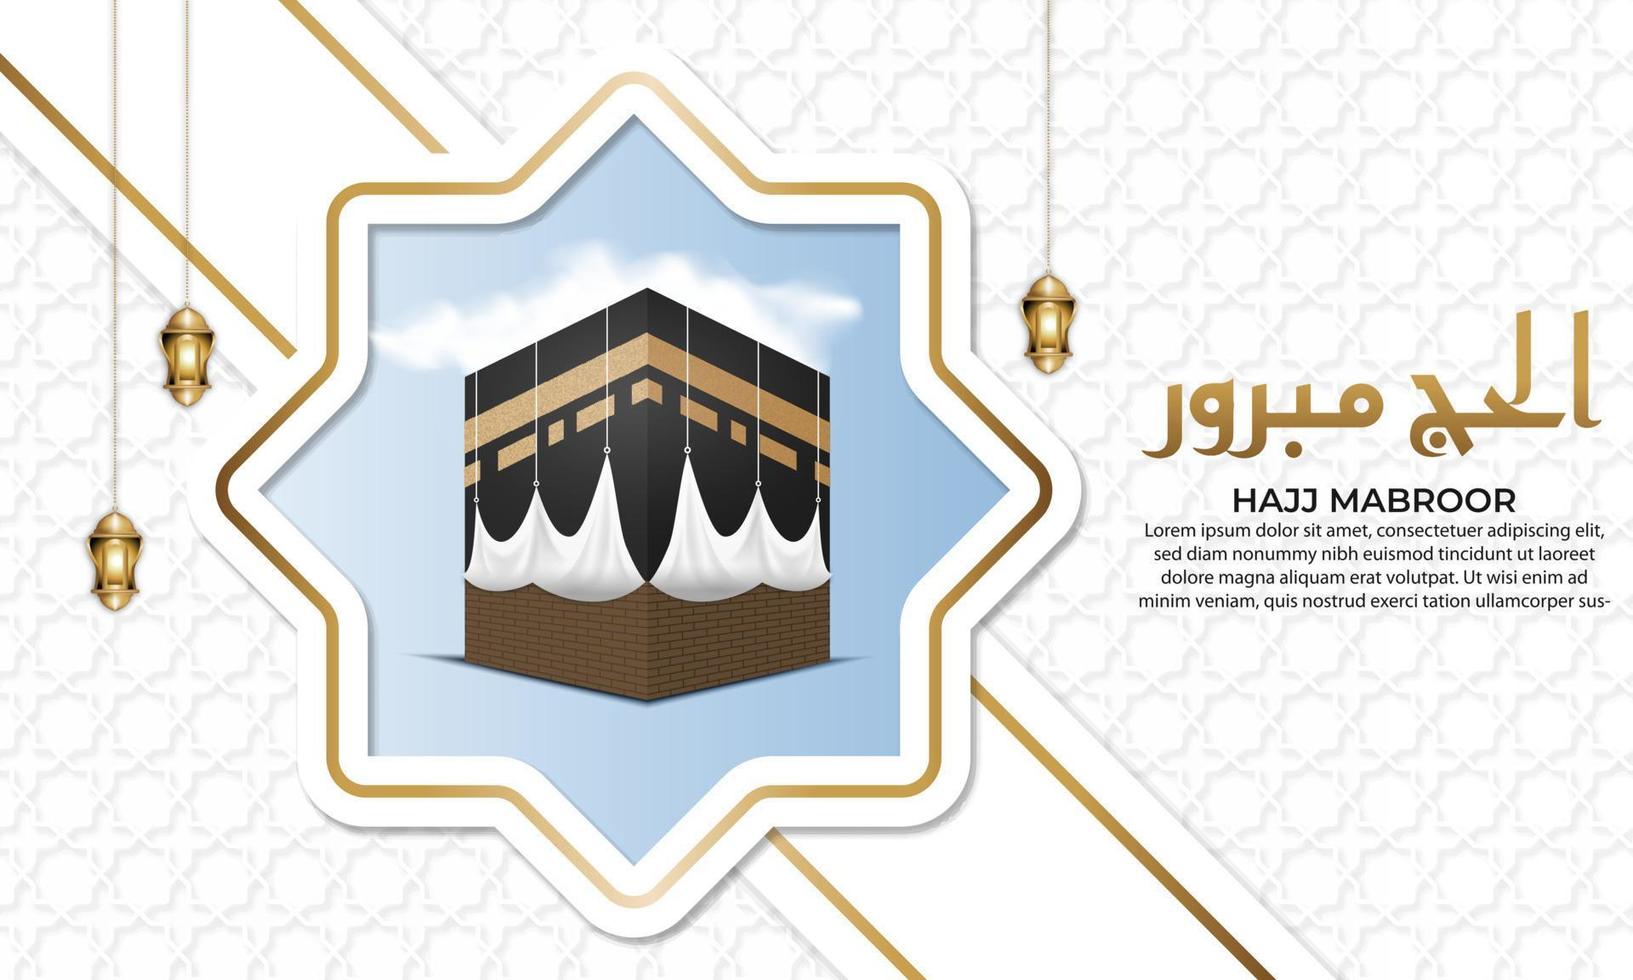 webislamic saluto hajj per eid adha mubarak e pellegrinaggio vettore